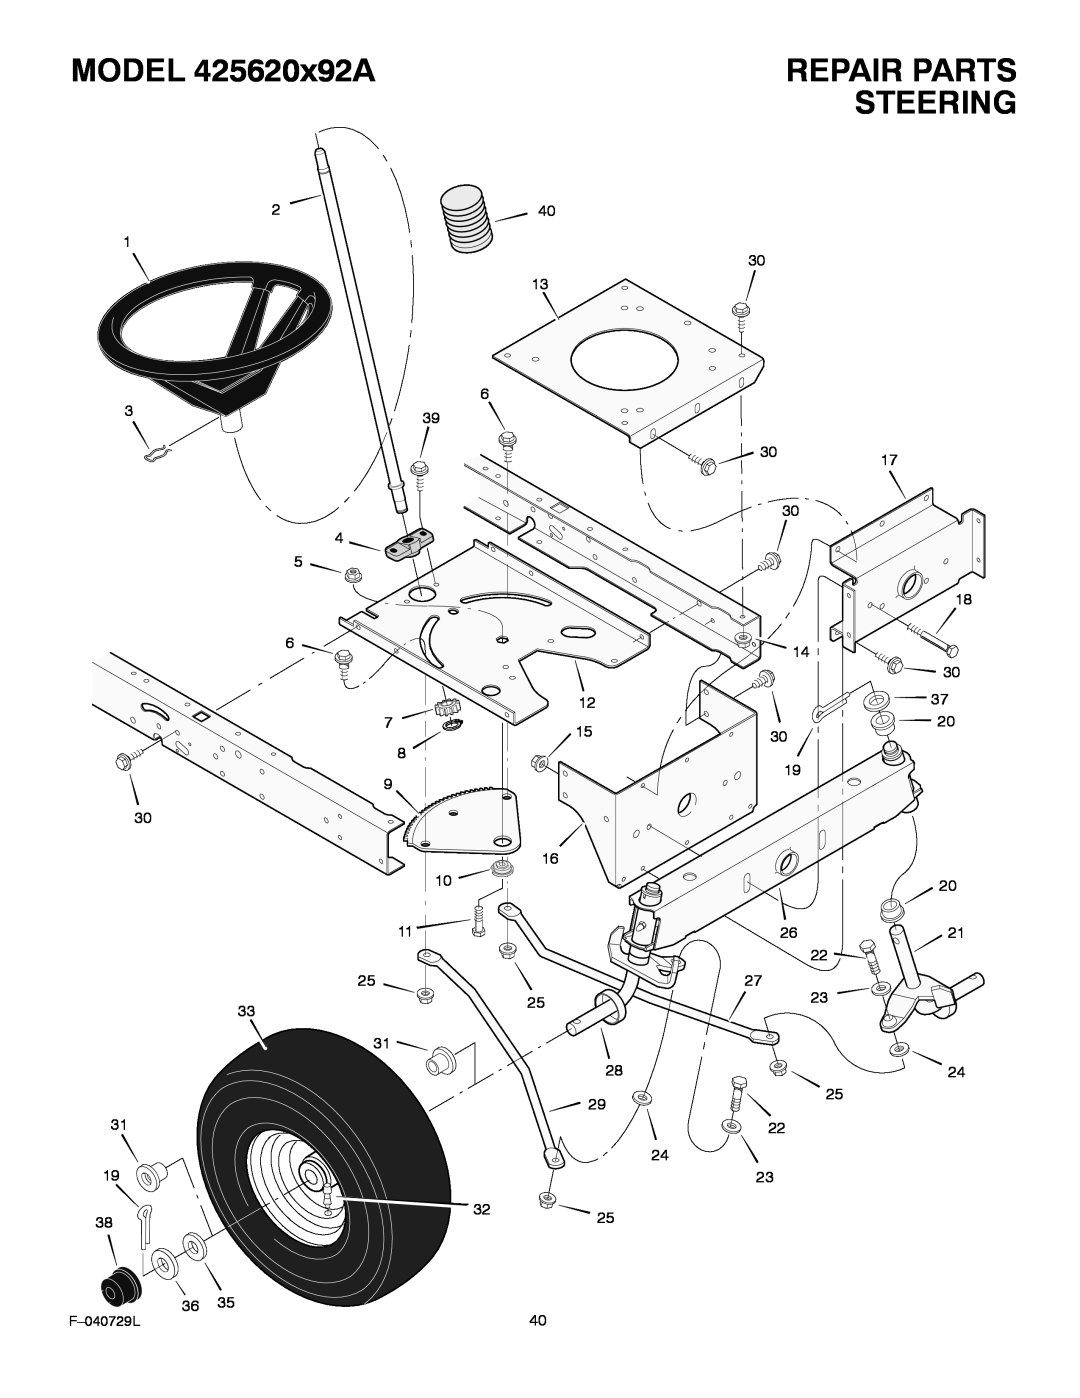 Murray manual Steering, Repair Parts, MODEL 425620x92A 